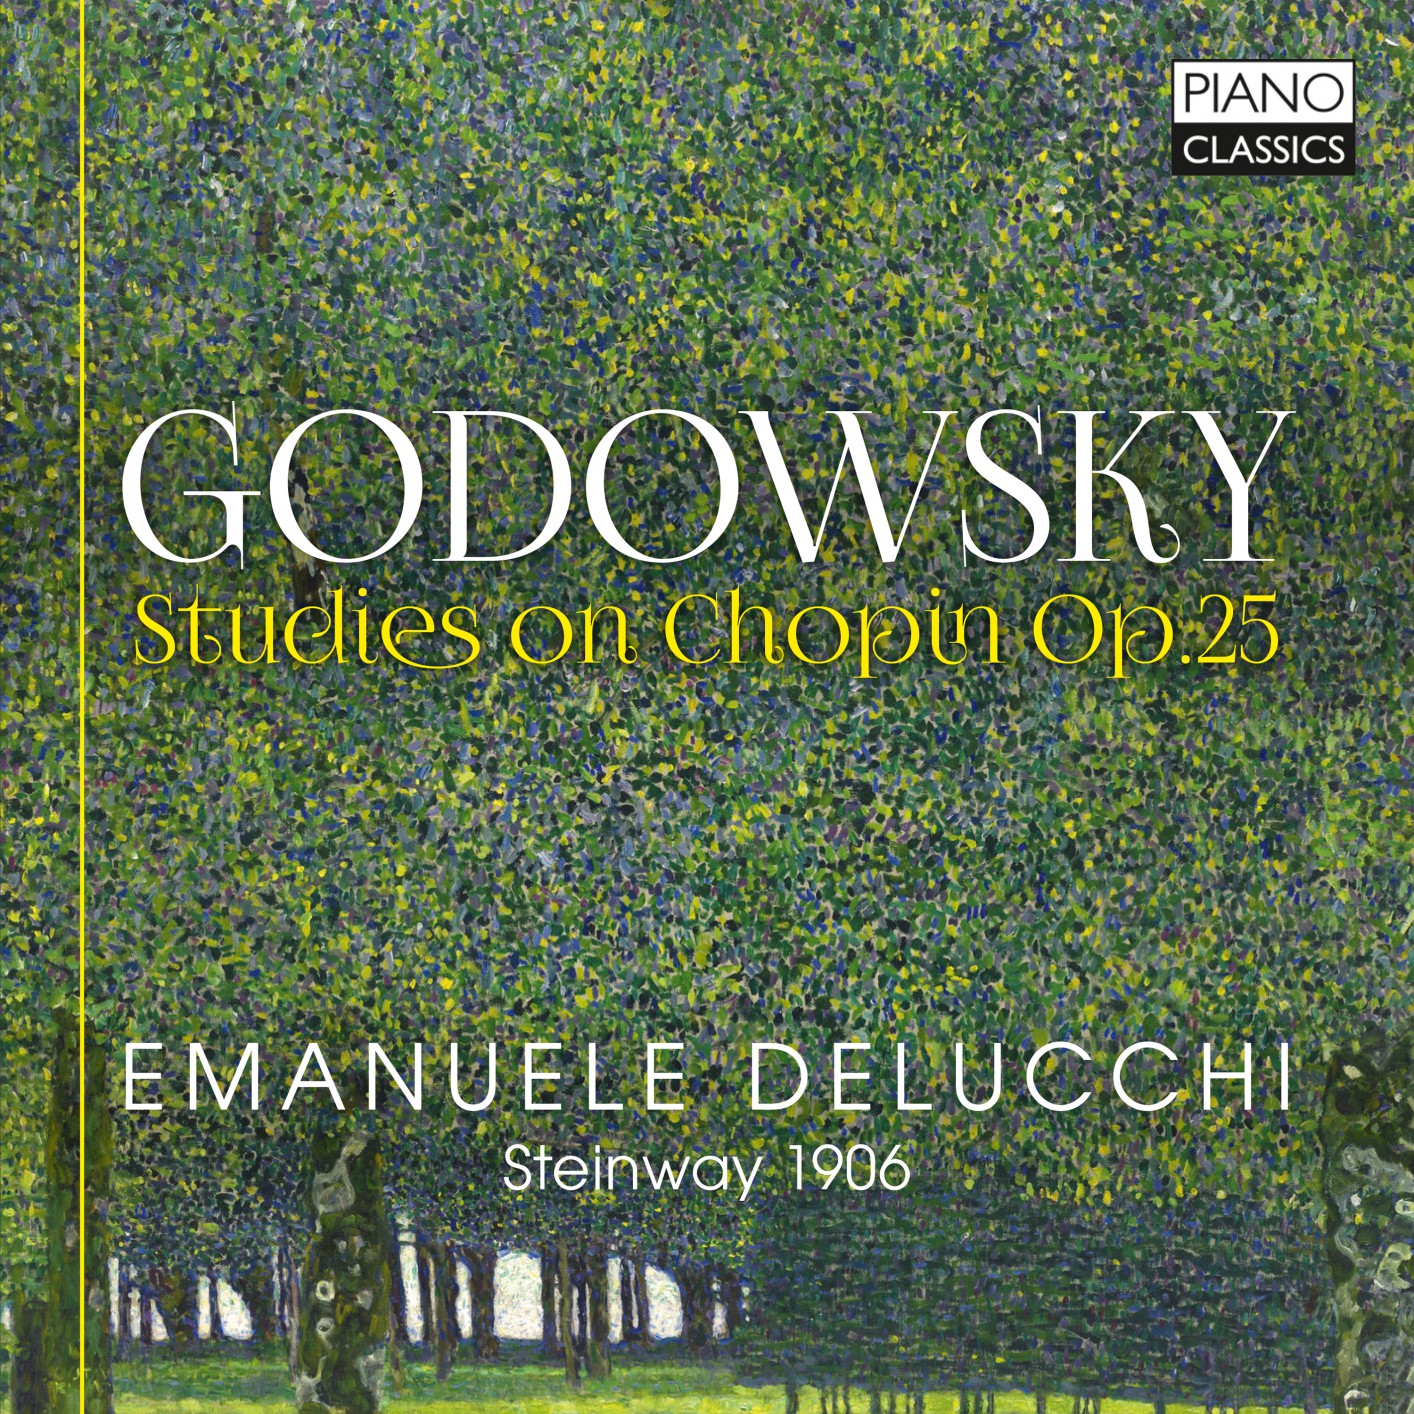 Emanuele Delucchi - Godowsky: Studies on Chopin, Op. 25 (2019) [FLAC 24bit/96kHz]